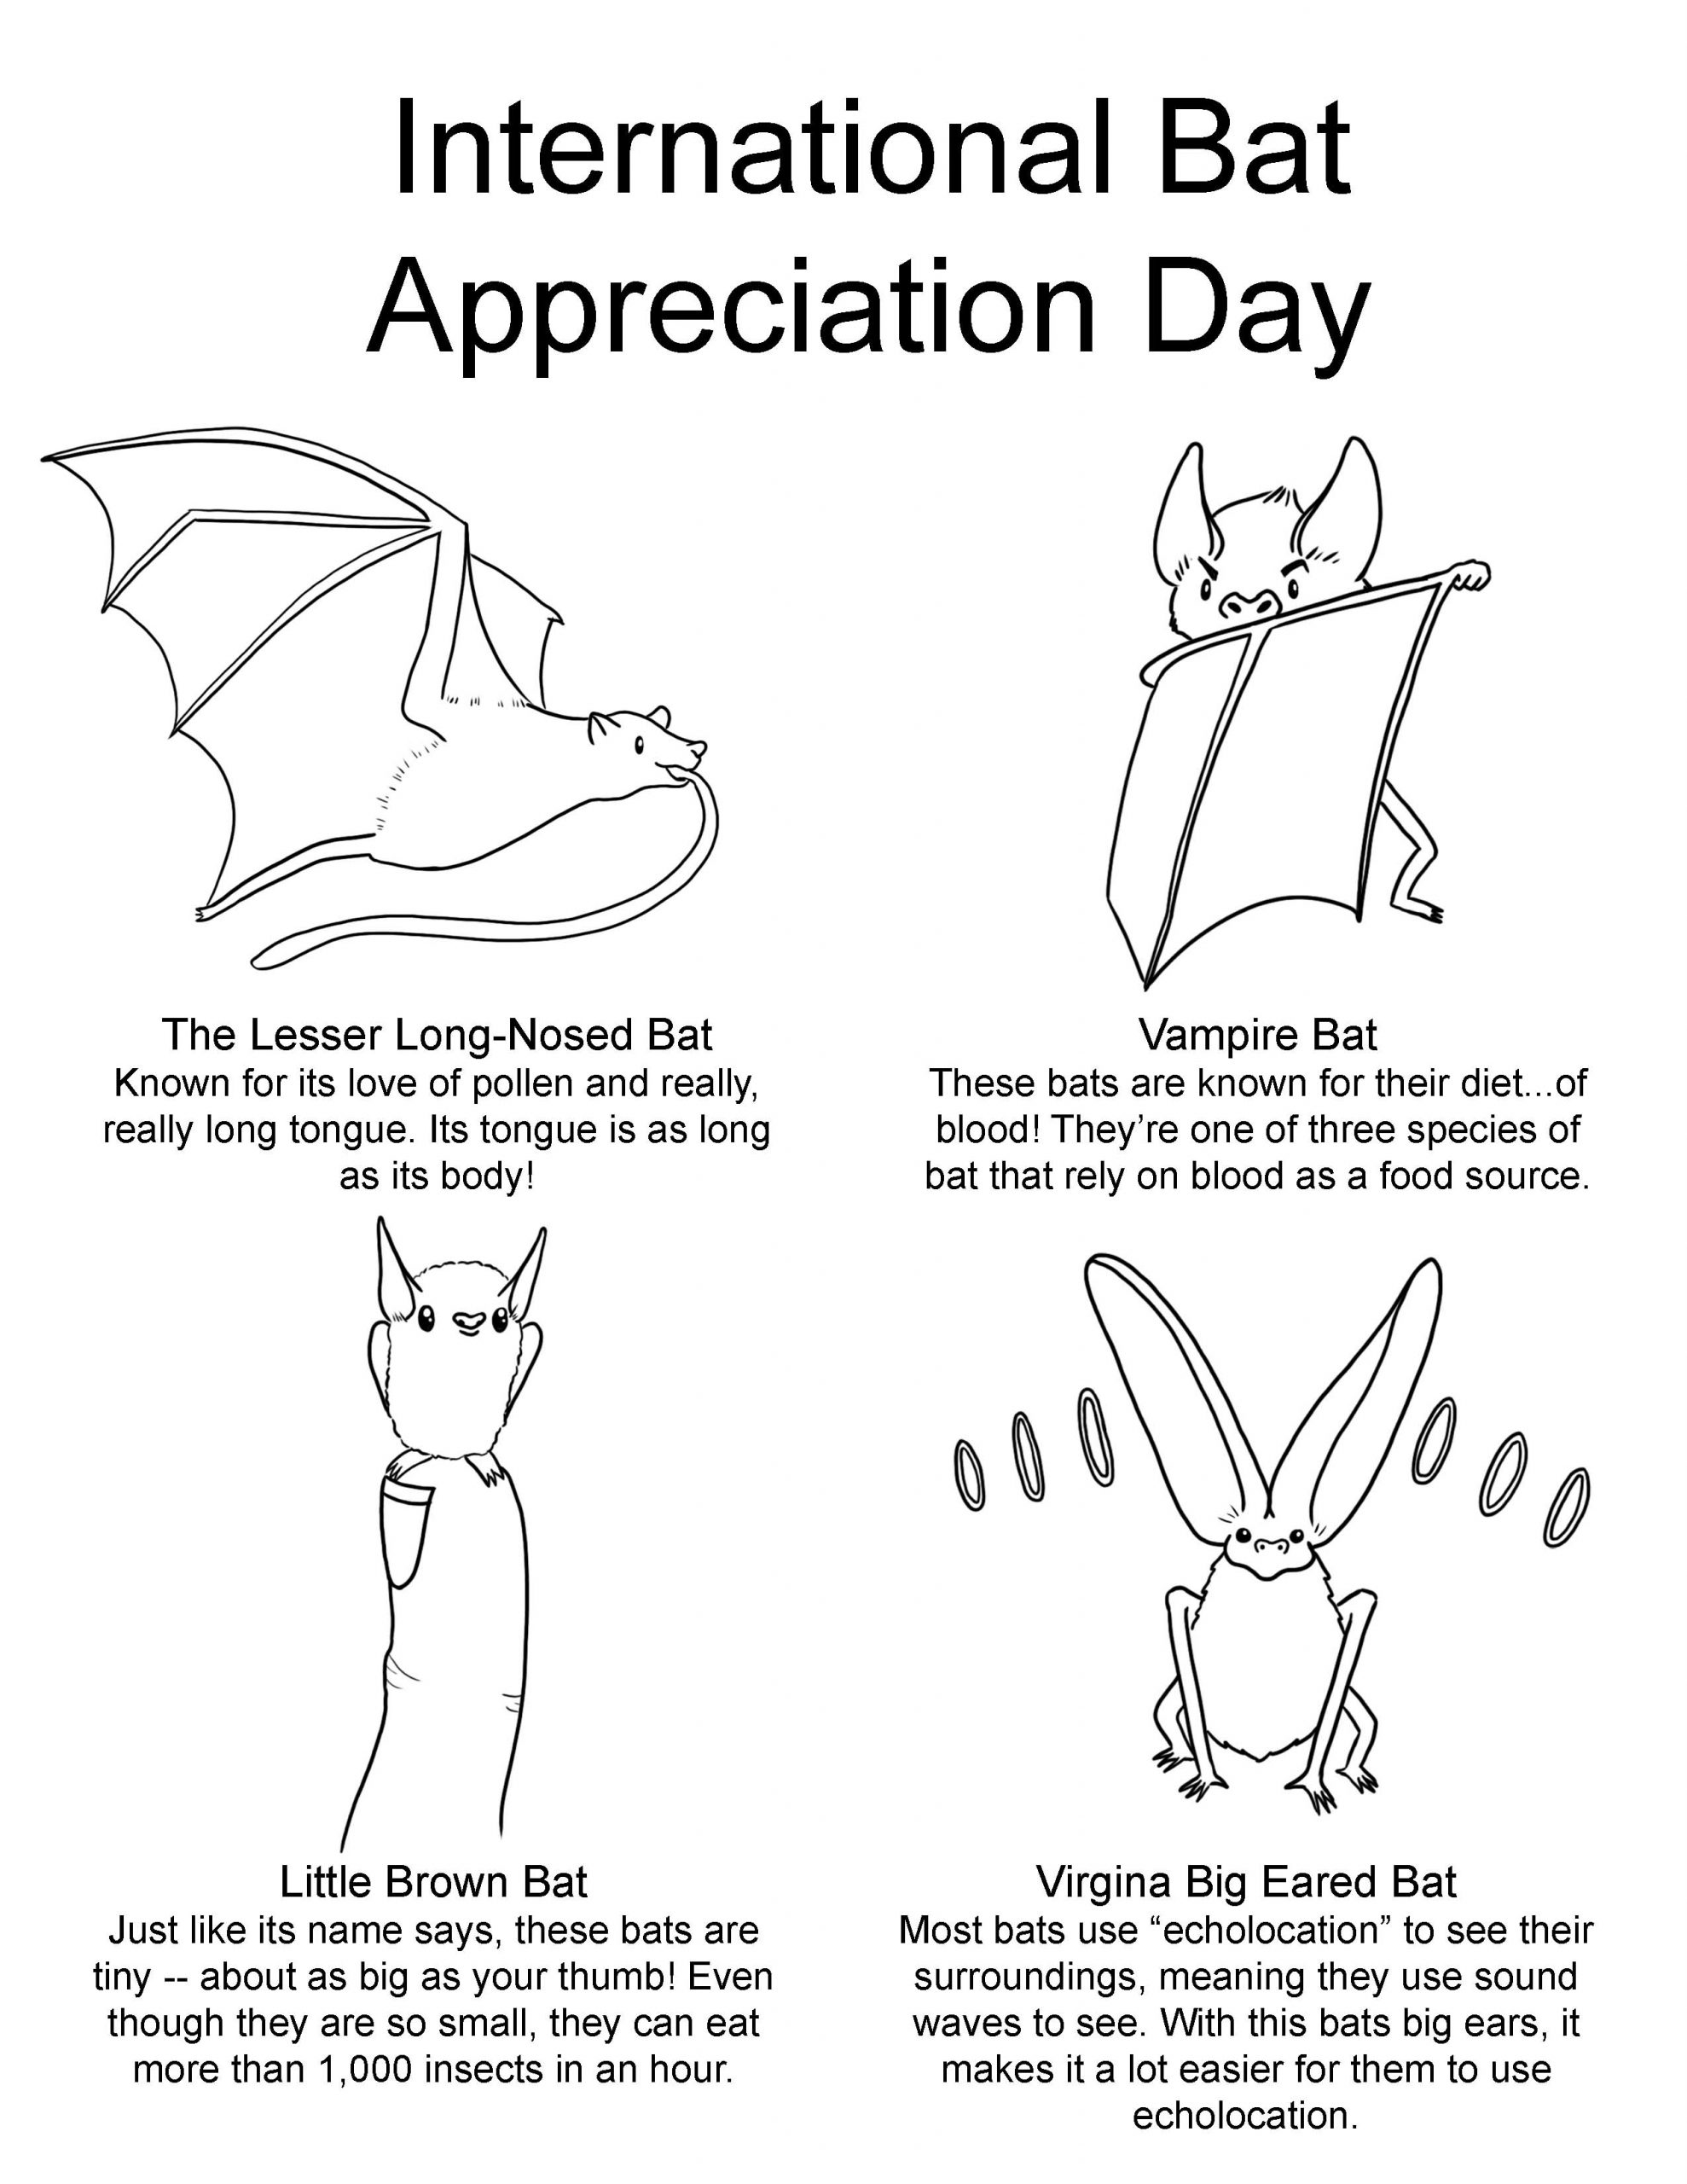 International Bat Appreciation Day Art Sphere Inc.